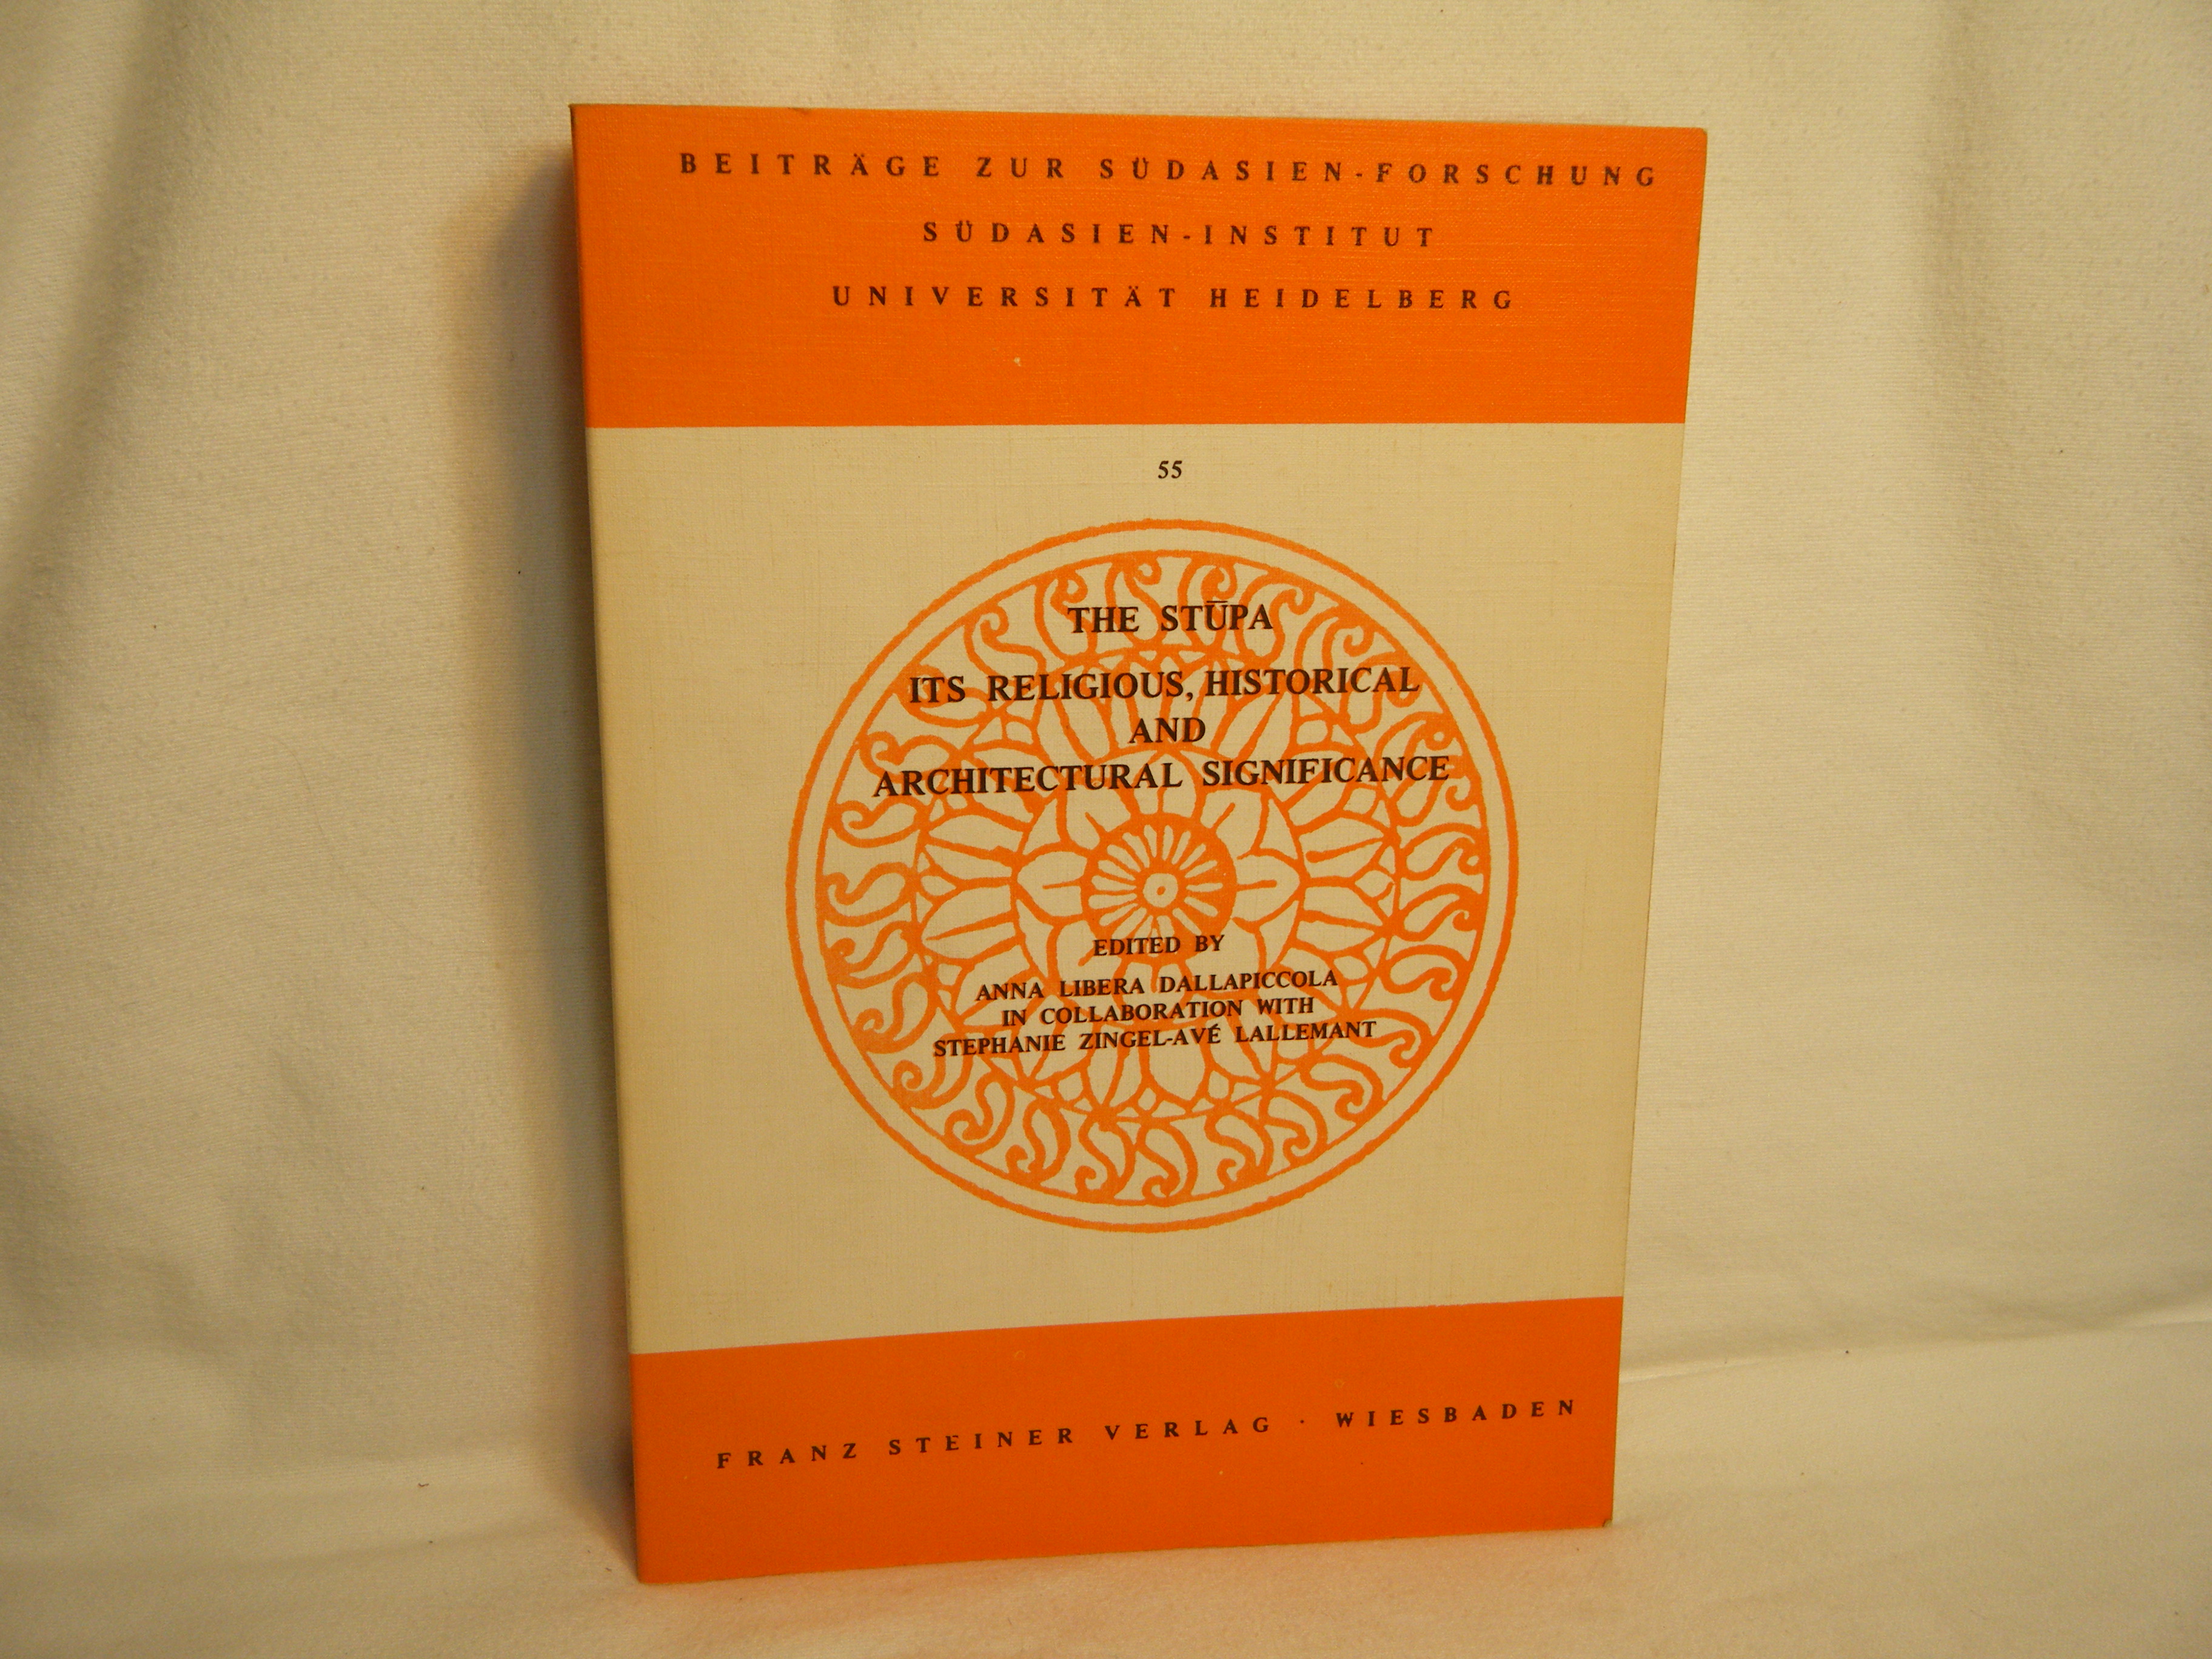 The Stupa: its Religious, Historical and Architectural Significance - Dallapiccola, Anna Libera, Ed.